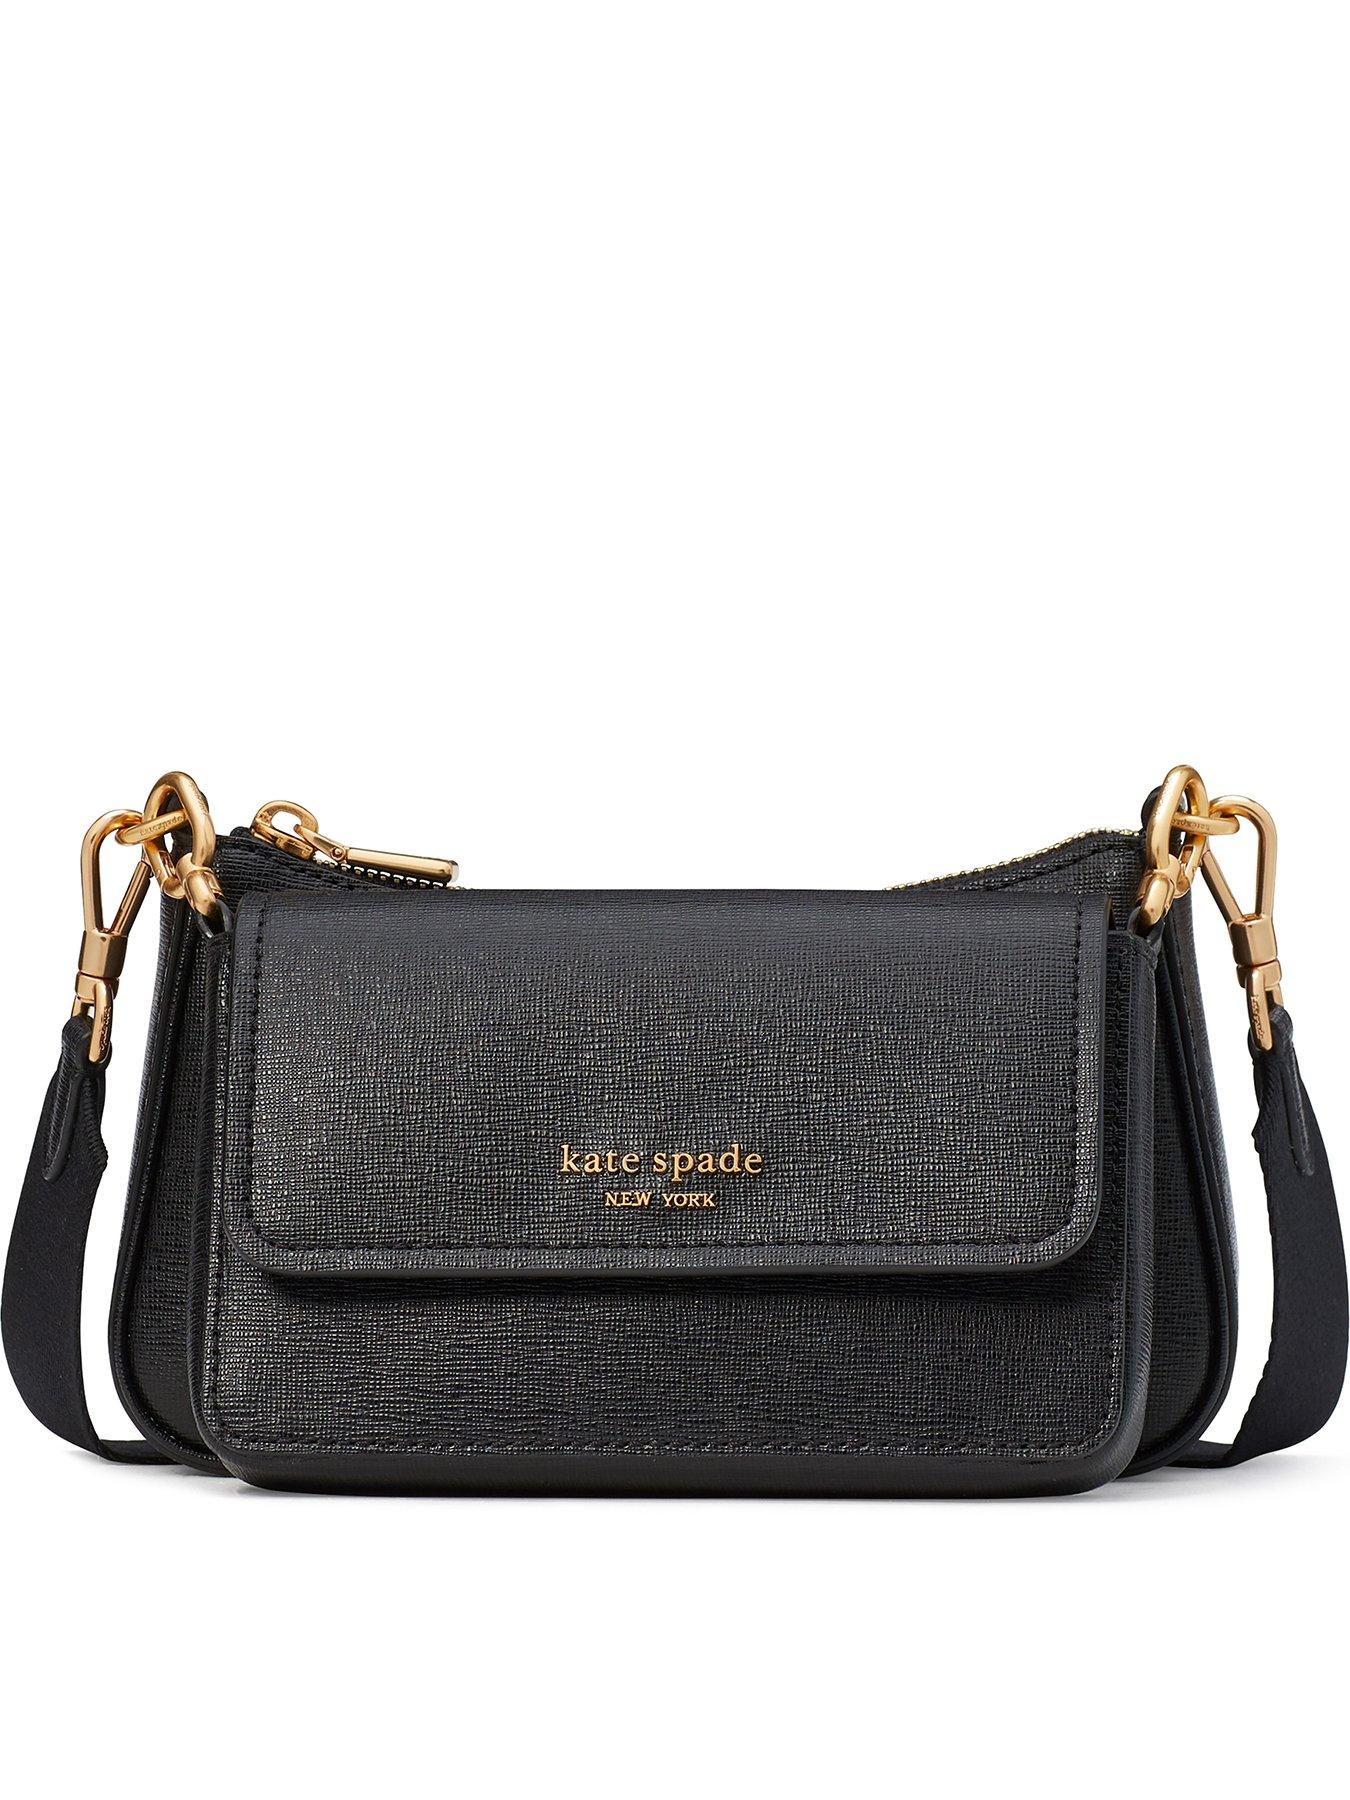 Kate spade new york | Bags & purses | Designer brands 